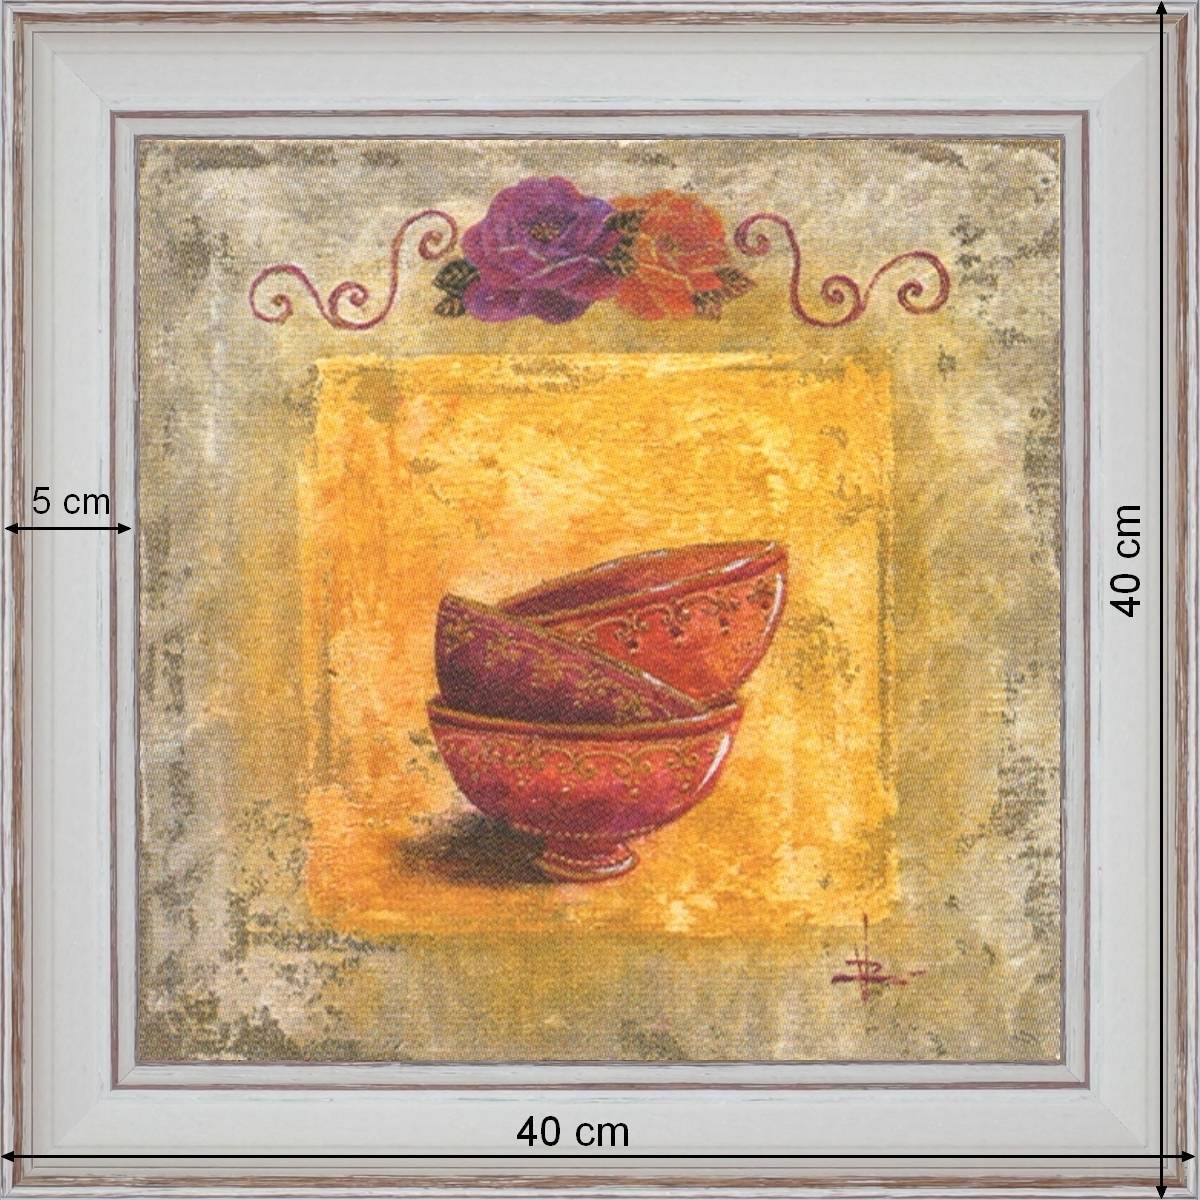 bowls - dimensions 40 x 40 cm